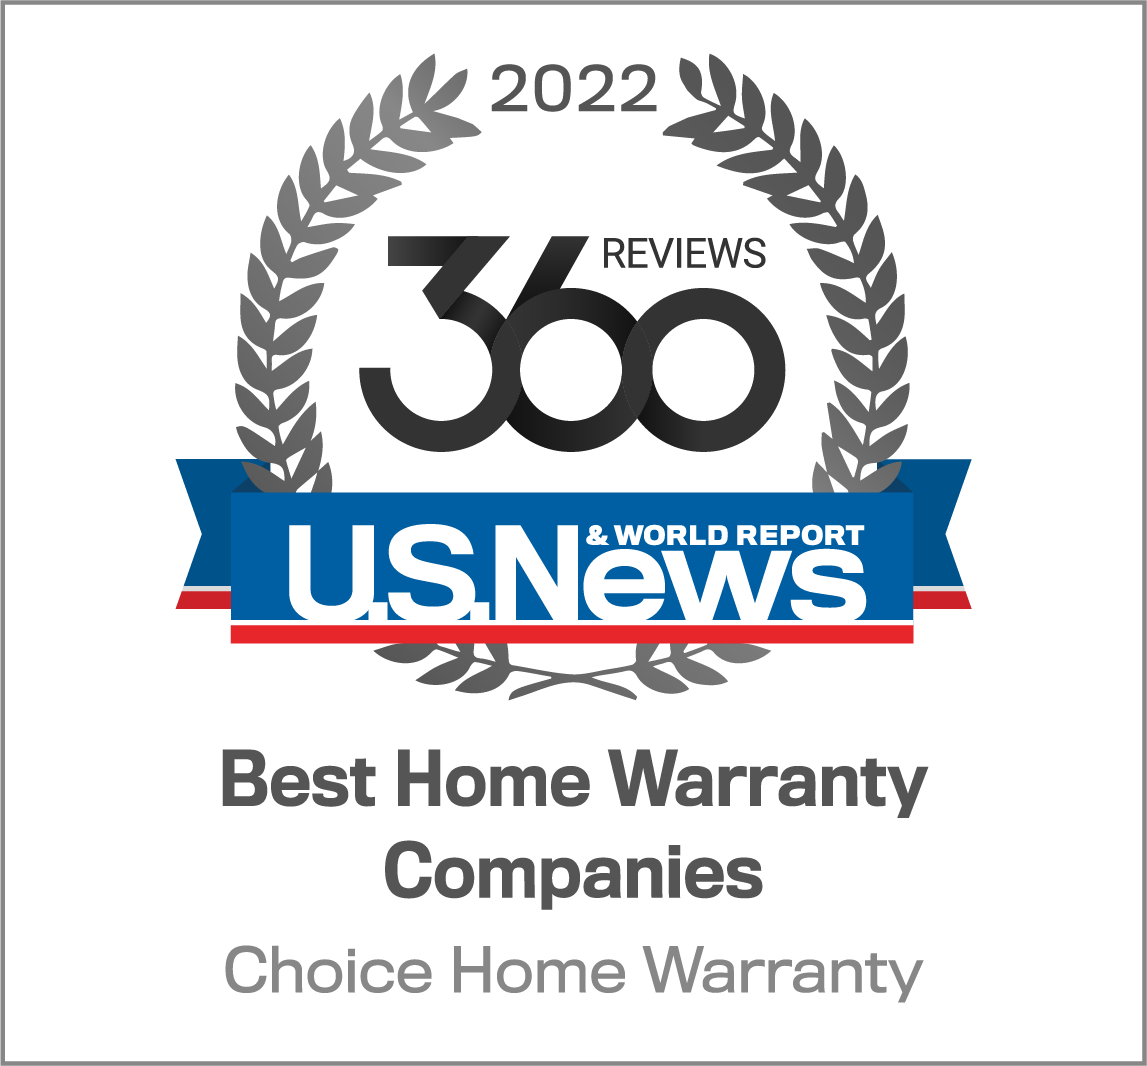 U.S. News & World Report’s 360 Reviews Names Choice Home Warranty Among